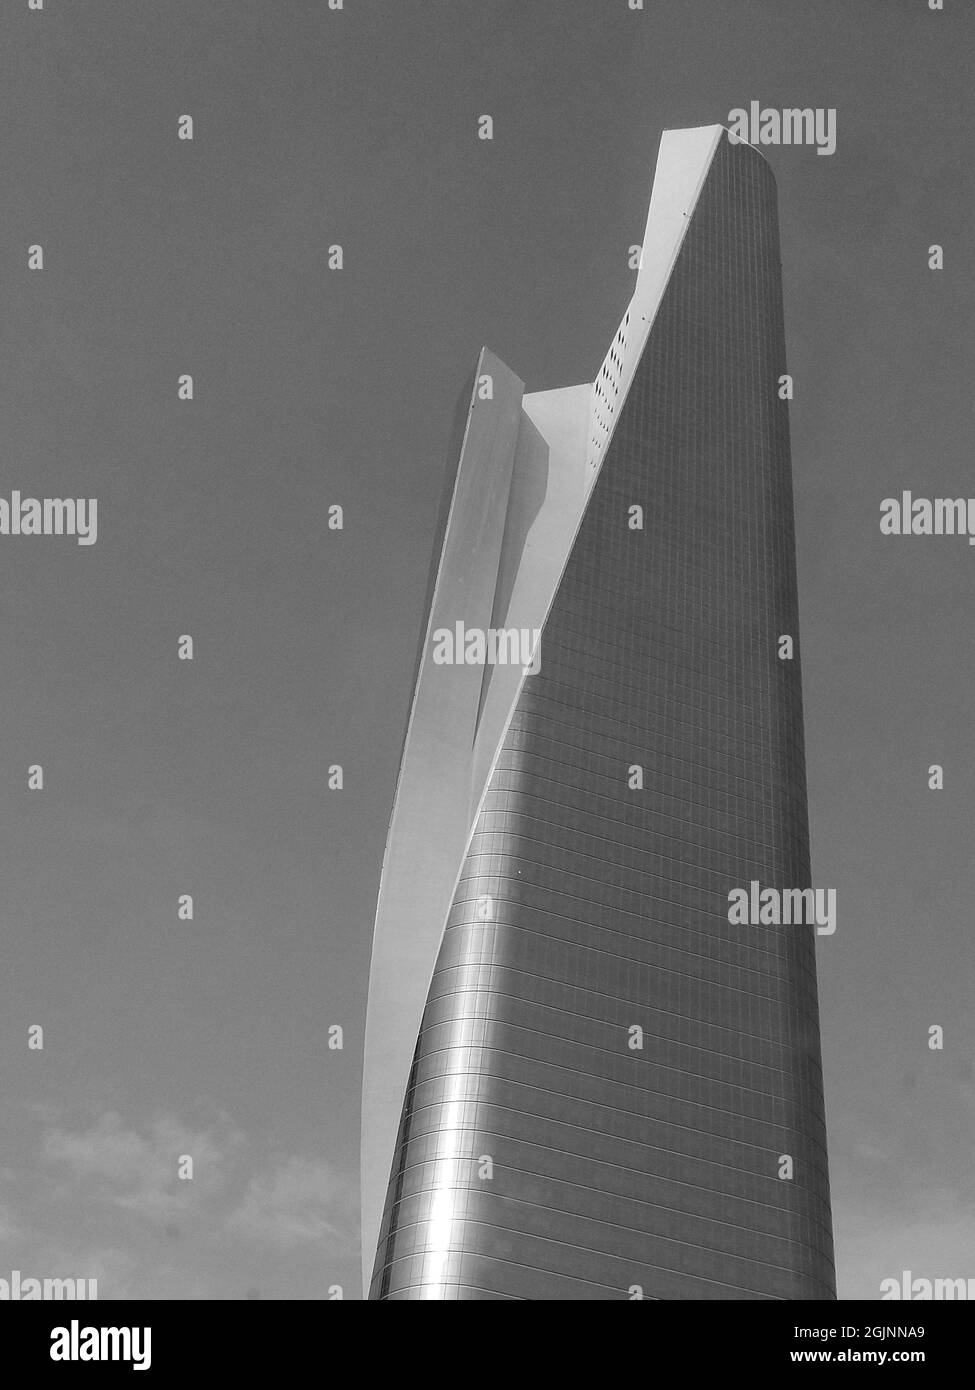 Black white Photo Of Kuwait Tallest Building Al Hamra Tower. Stock Photo